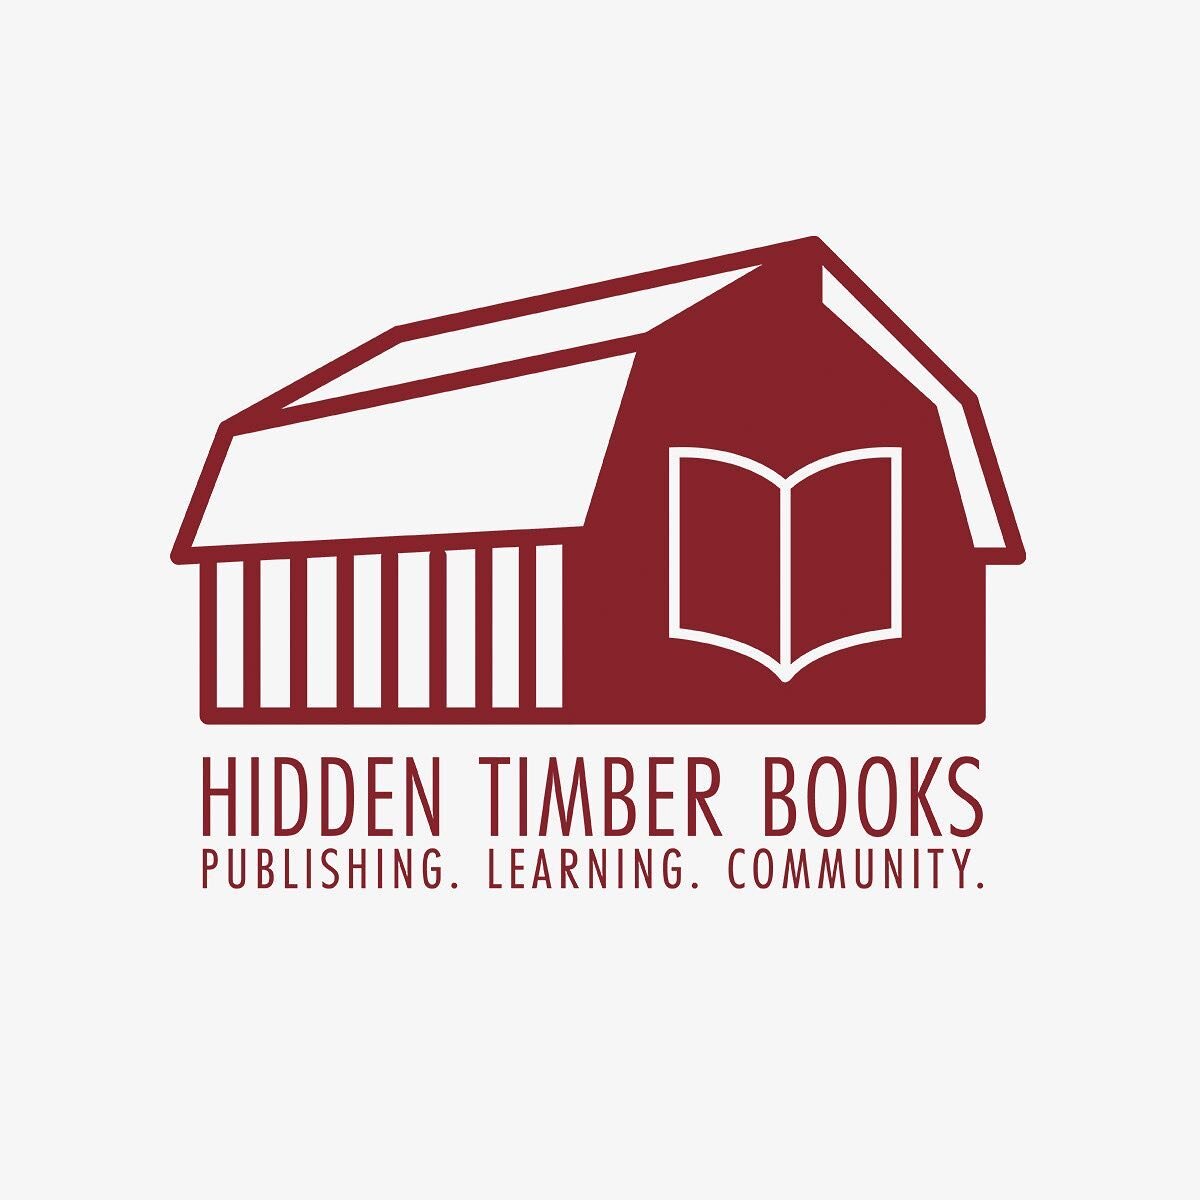 Hidden Timber Books &ndash; Logo Redesign

@hiddentimberbooks 

#graphicdesign#logo#publishing#books#barn#smallbusiness#burgandy#minimalism#clean#typography#jadethedesigner#follow#modern#vector